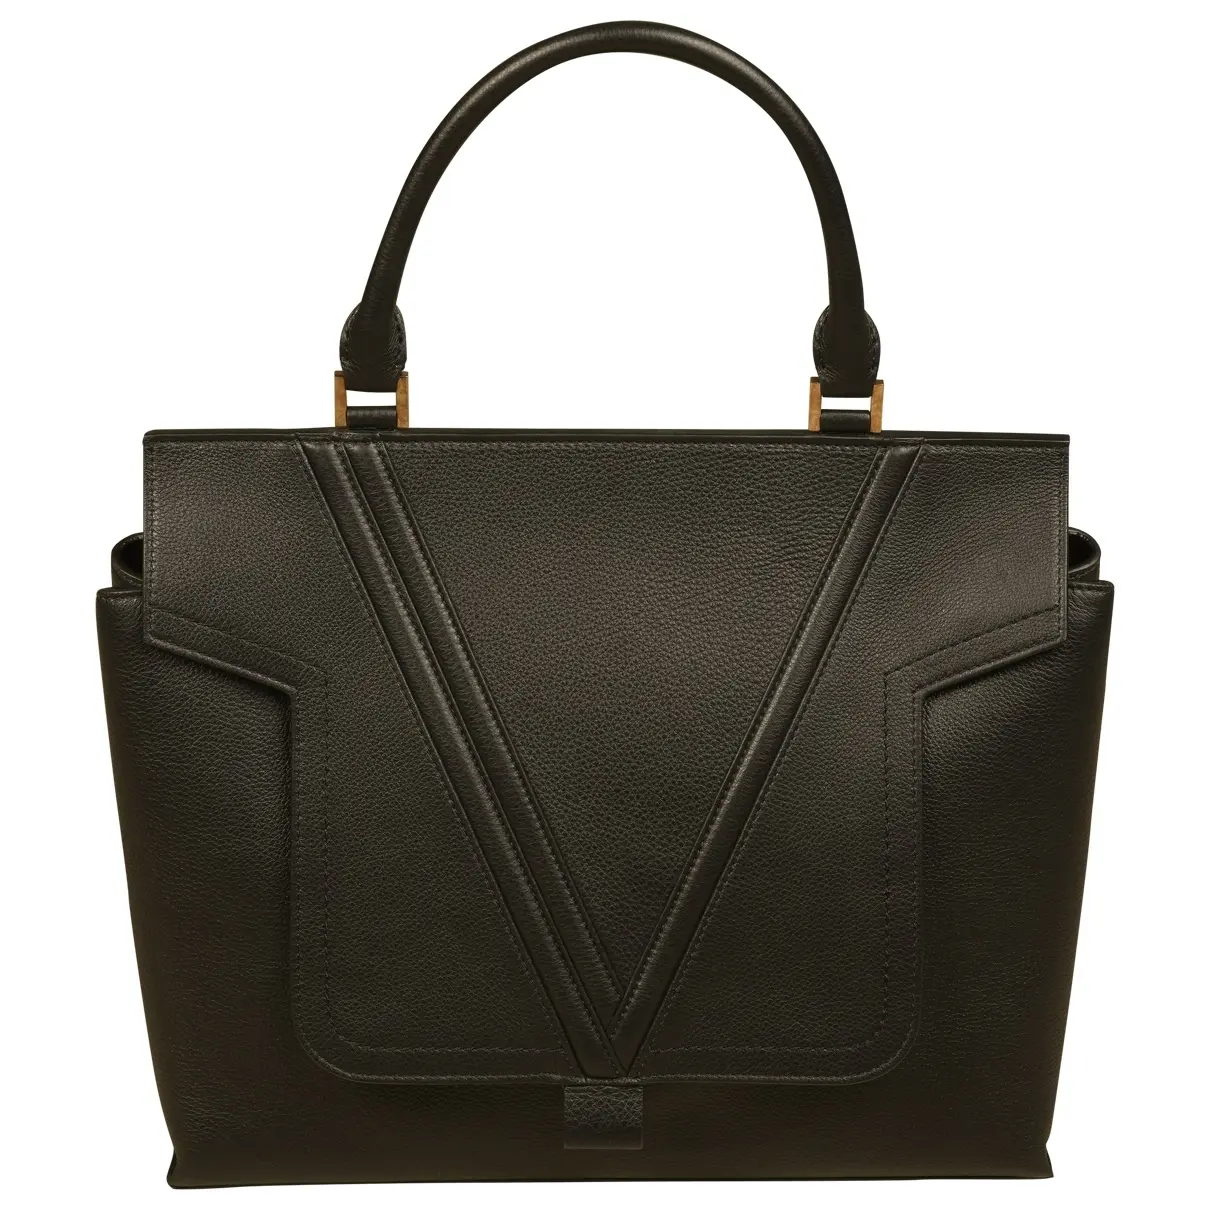 Leather handbag Vionnet